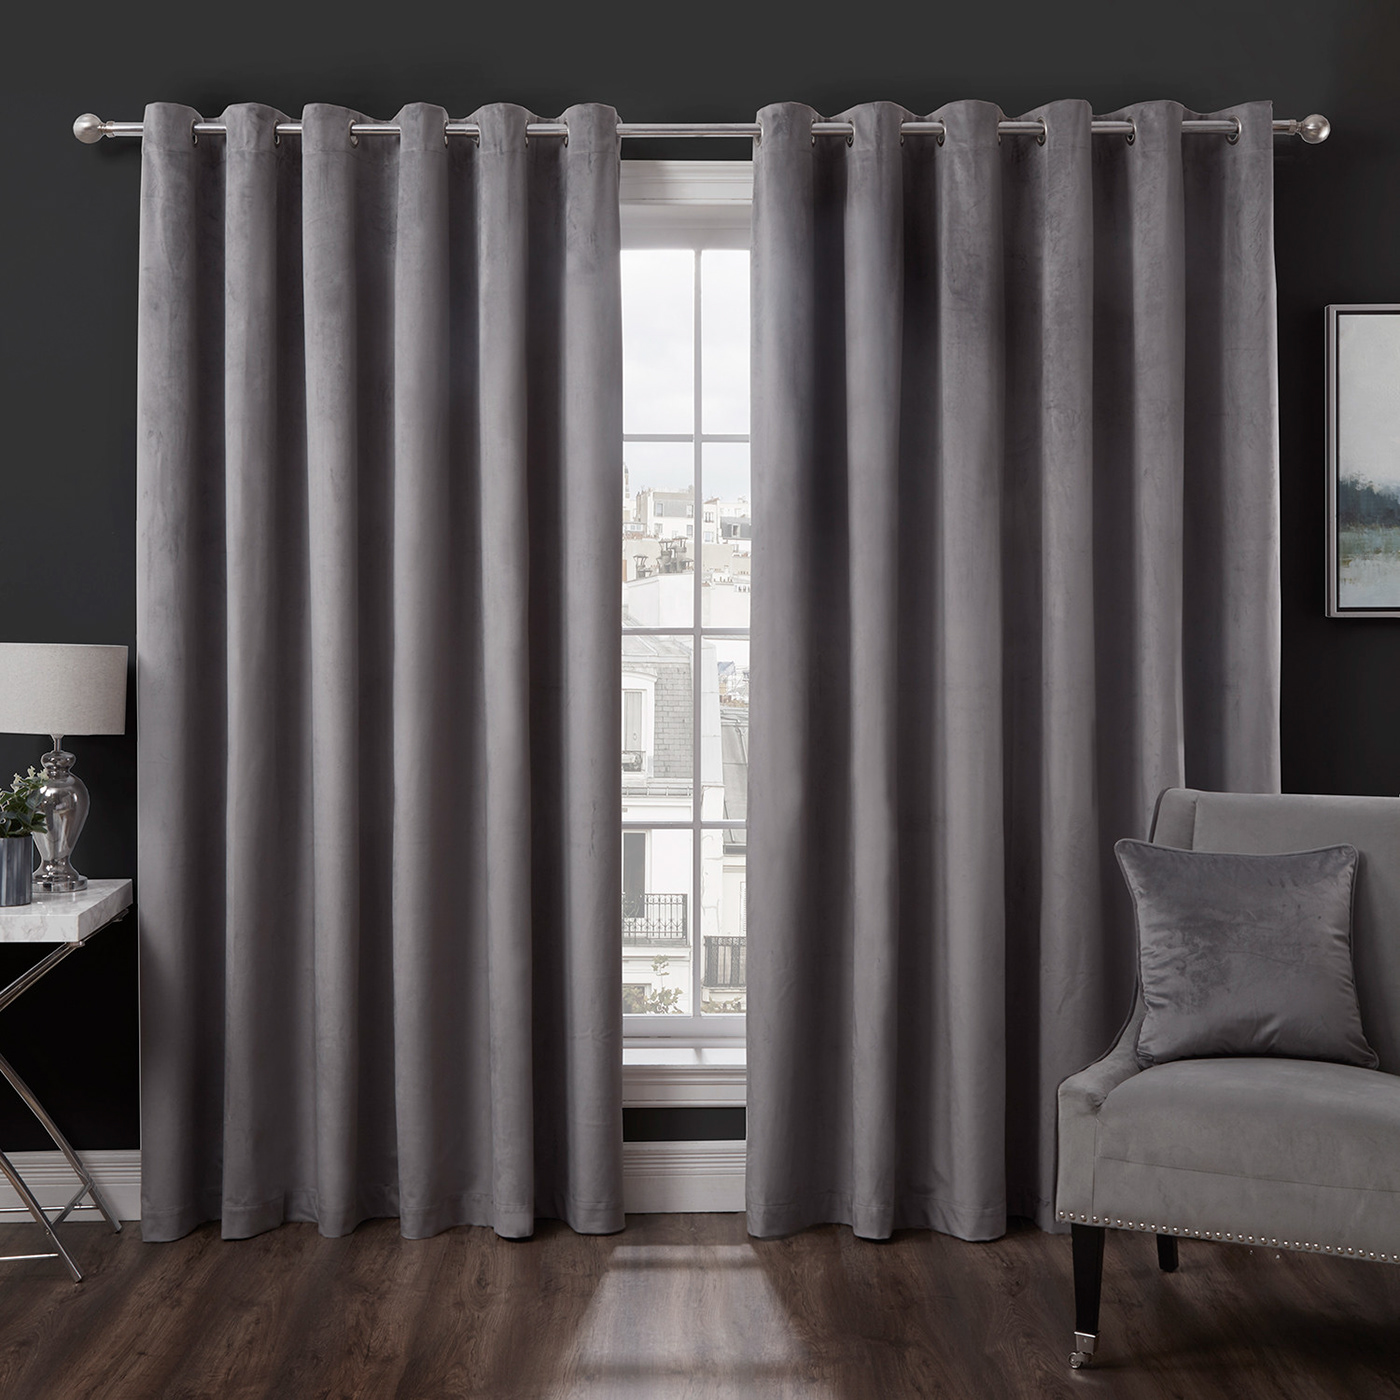 blackoutcurtains curtains homedecor Homeimprovements interiordesign